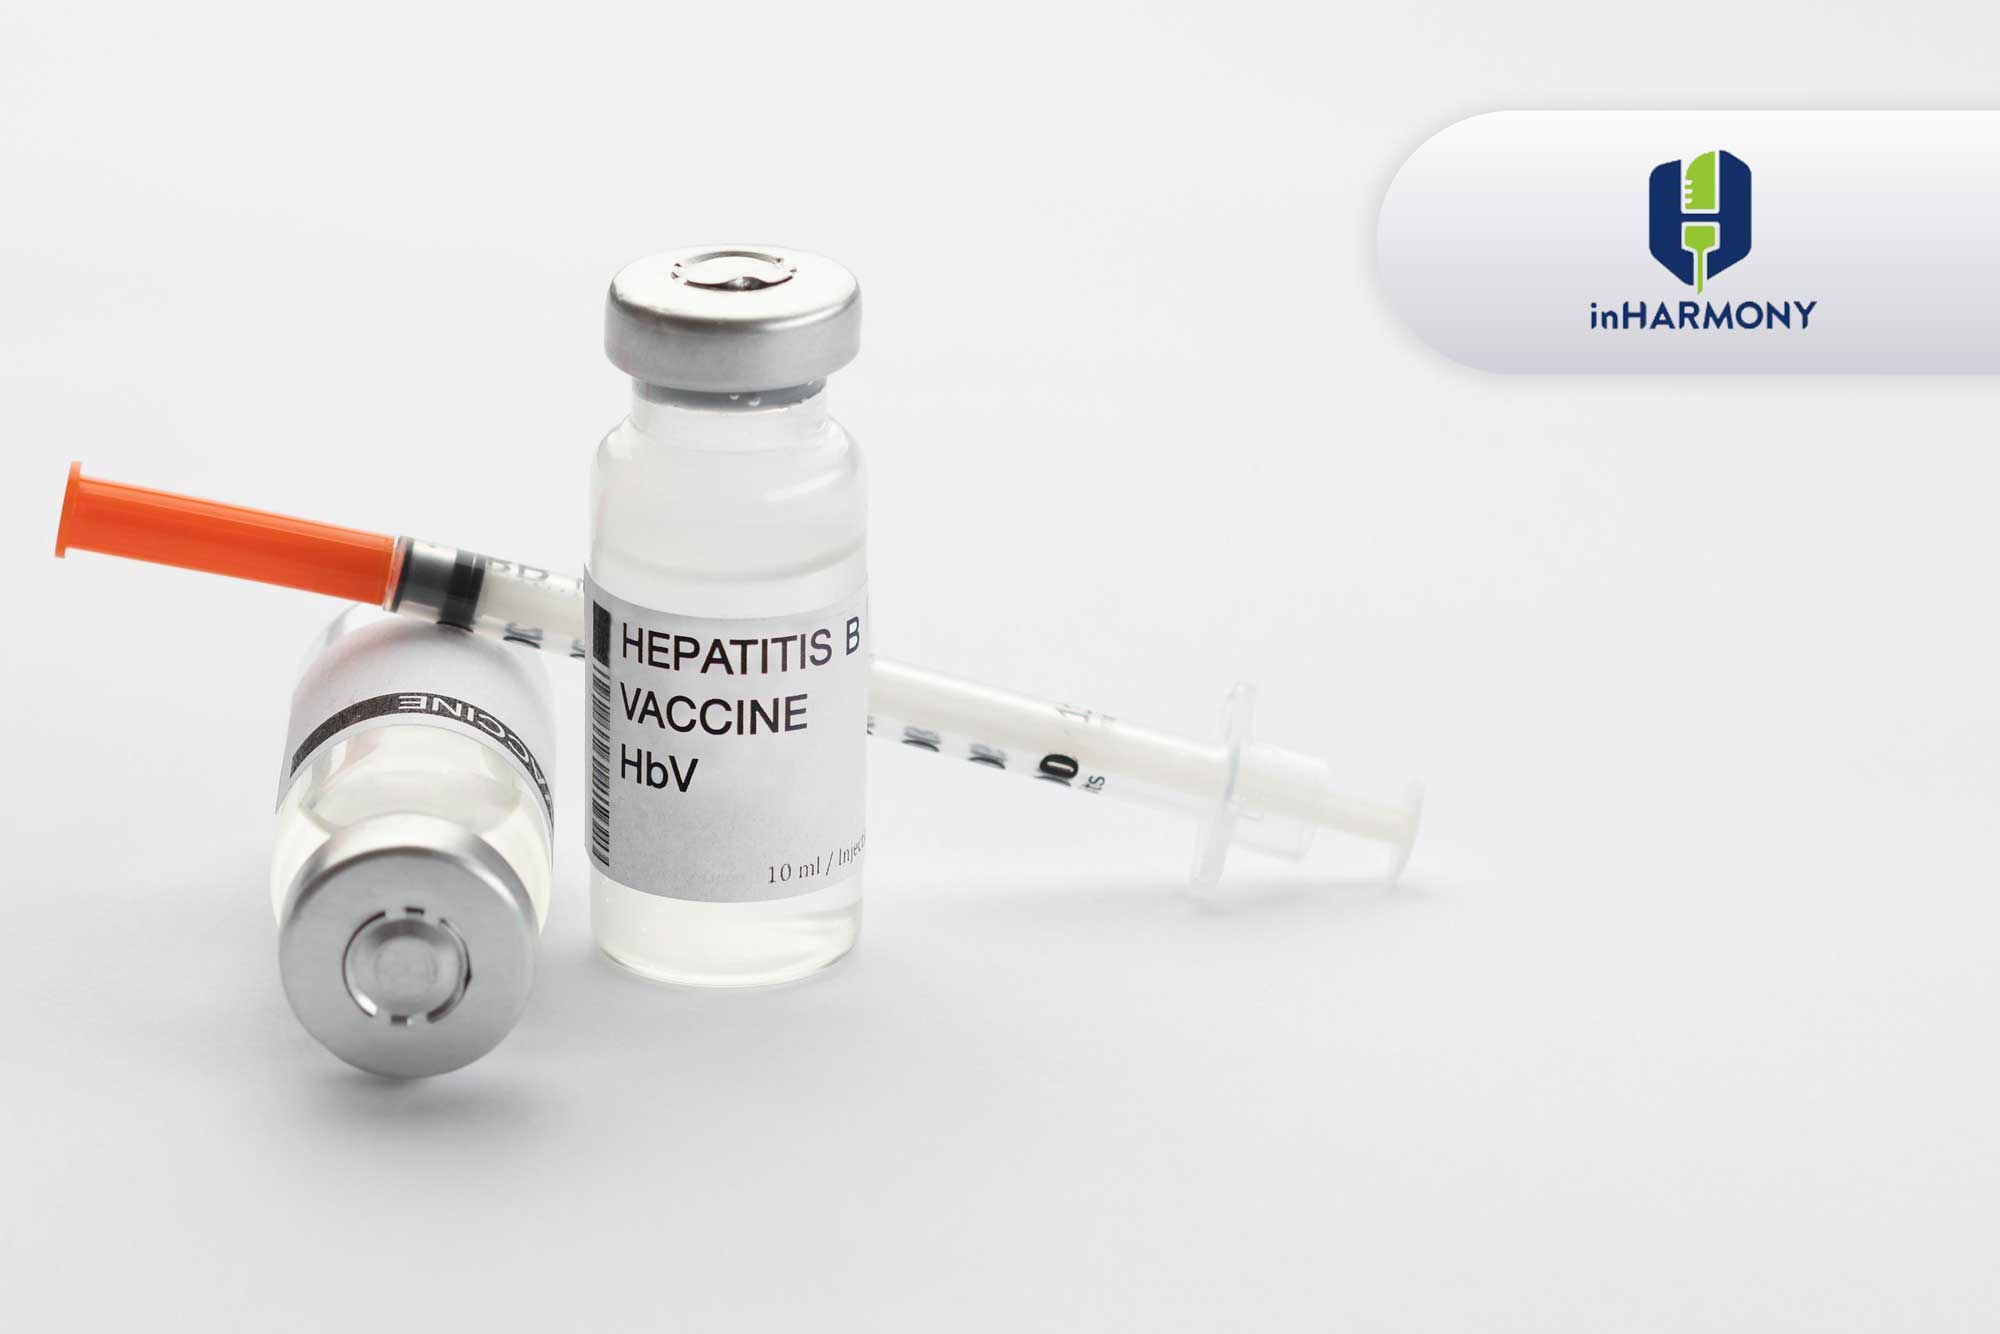 vaksin-hepatitis-B-inharmony_1691388889.jpg